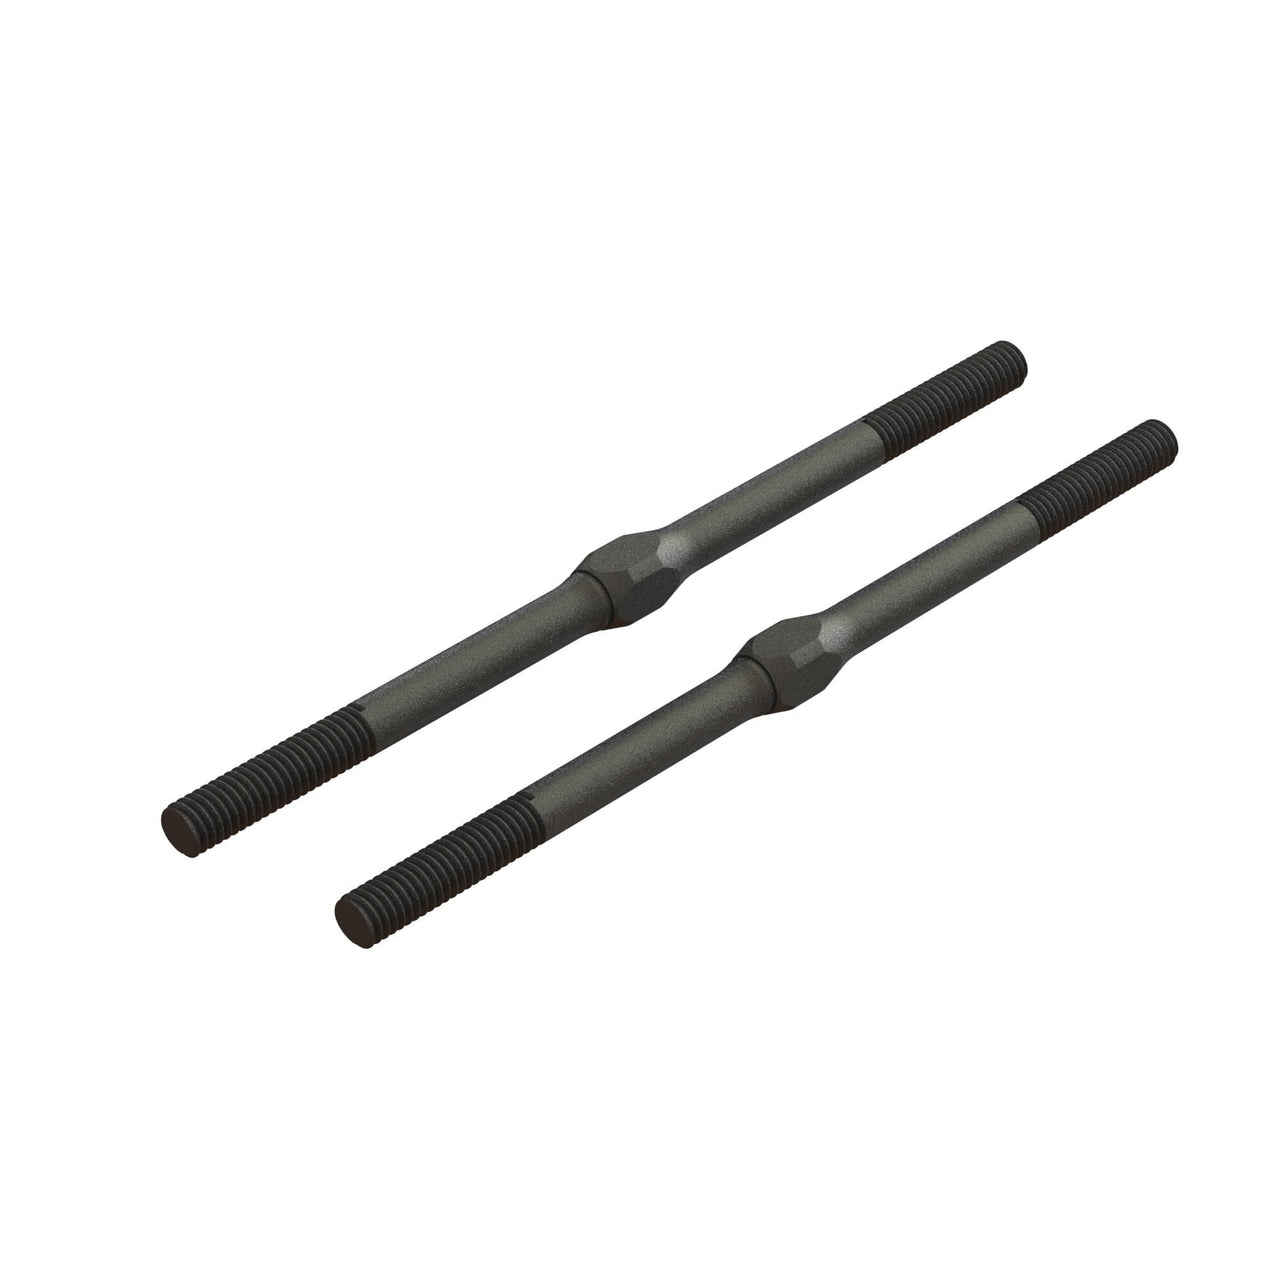 Steel Turnbuckle, M4 x 85mm Black (2) ara330716